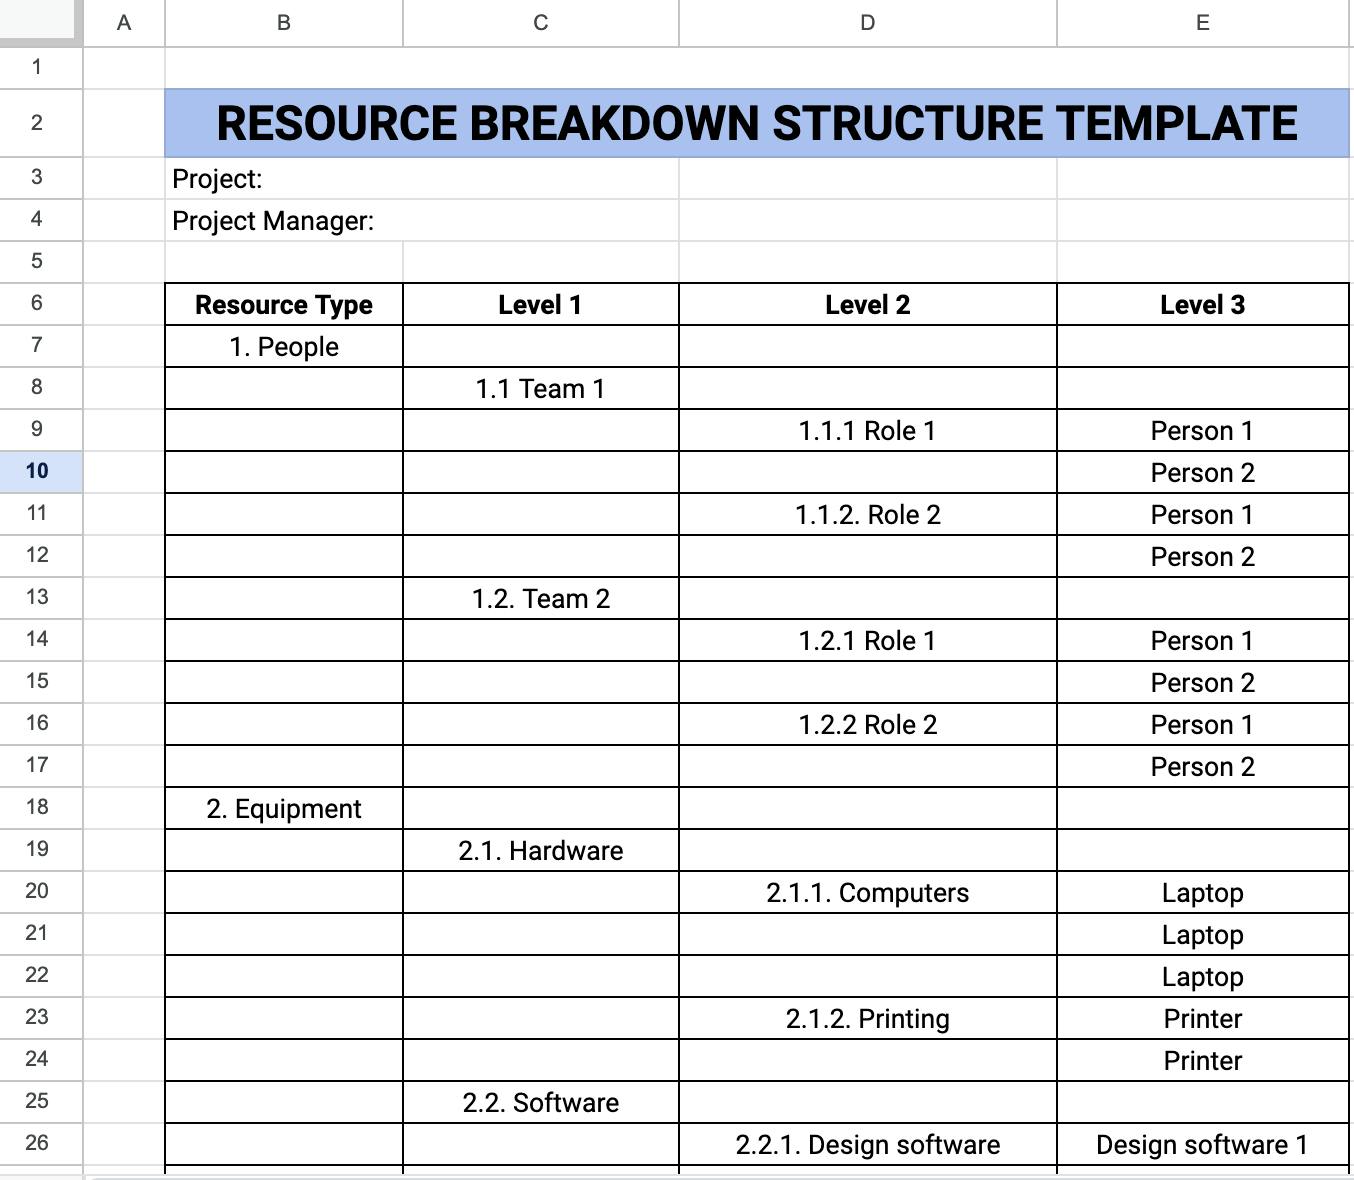 Resource breakdown structure template